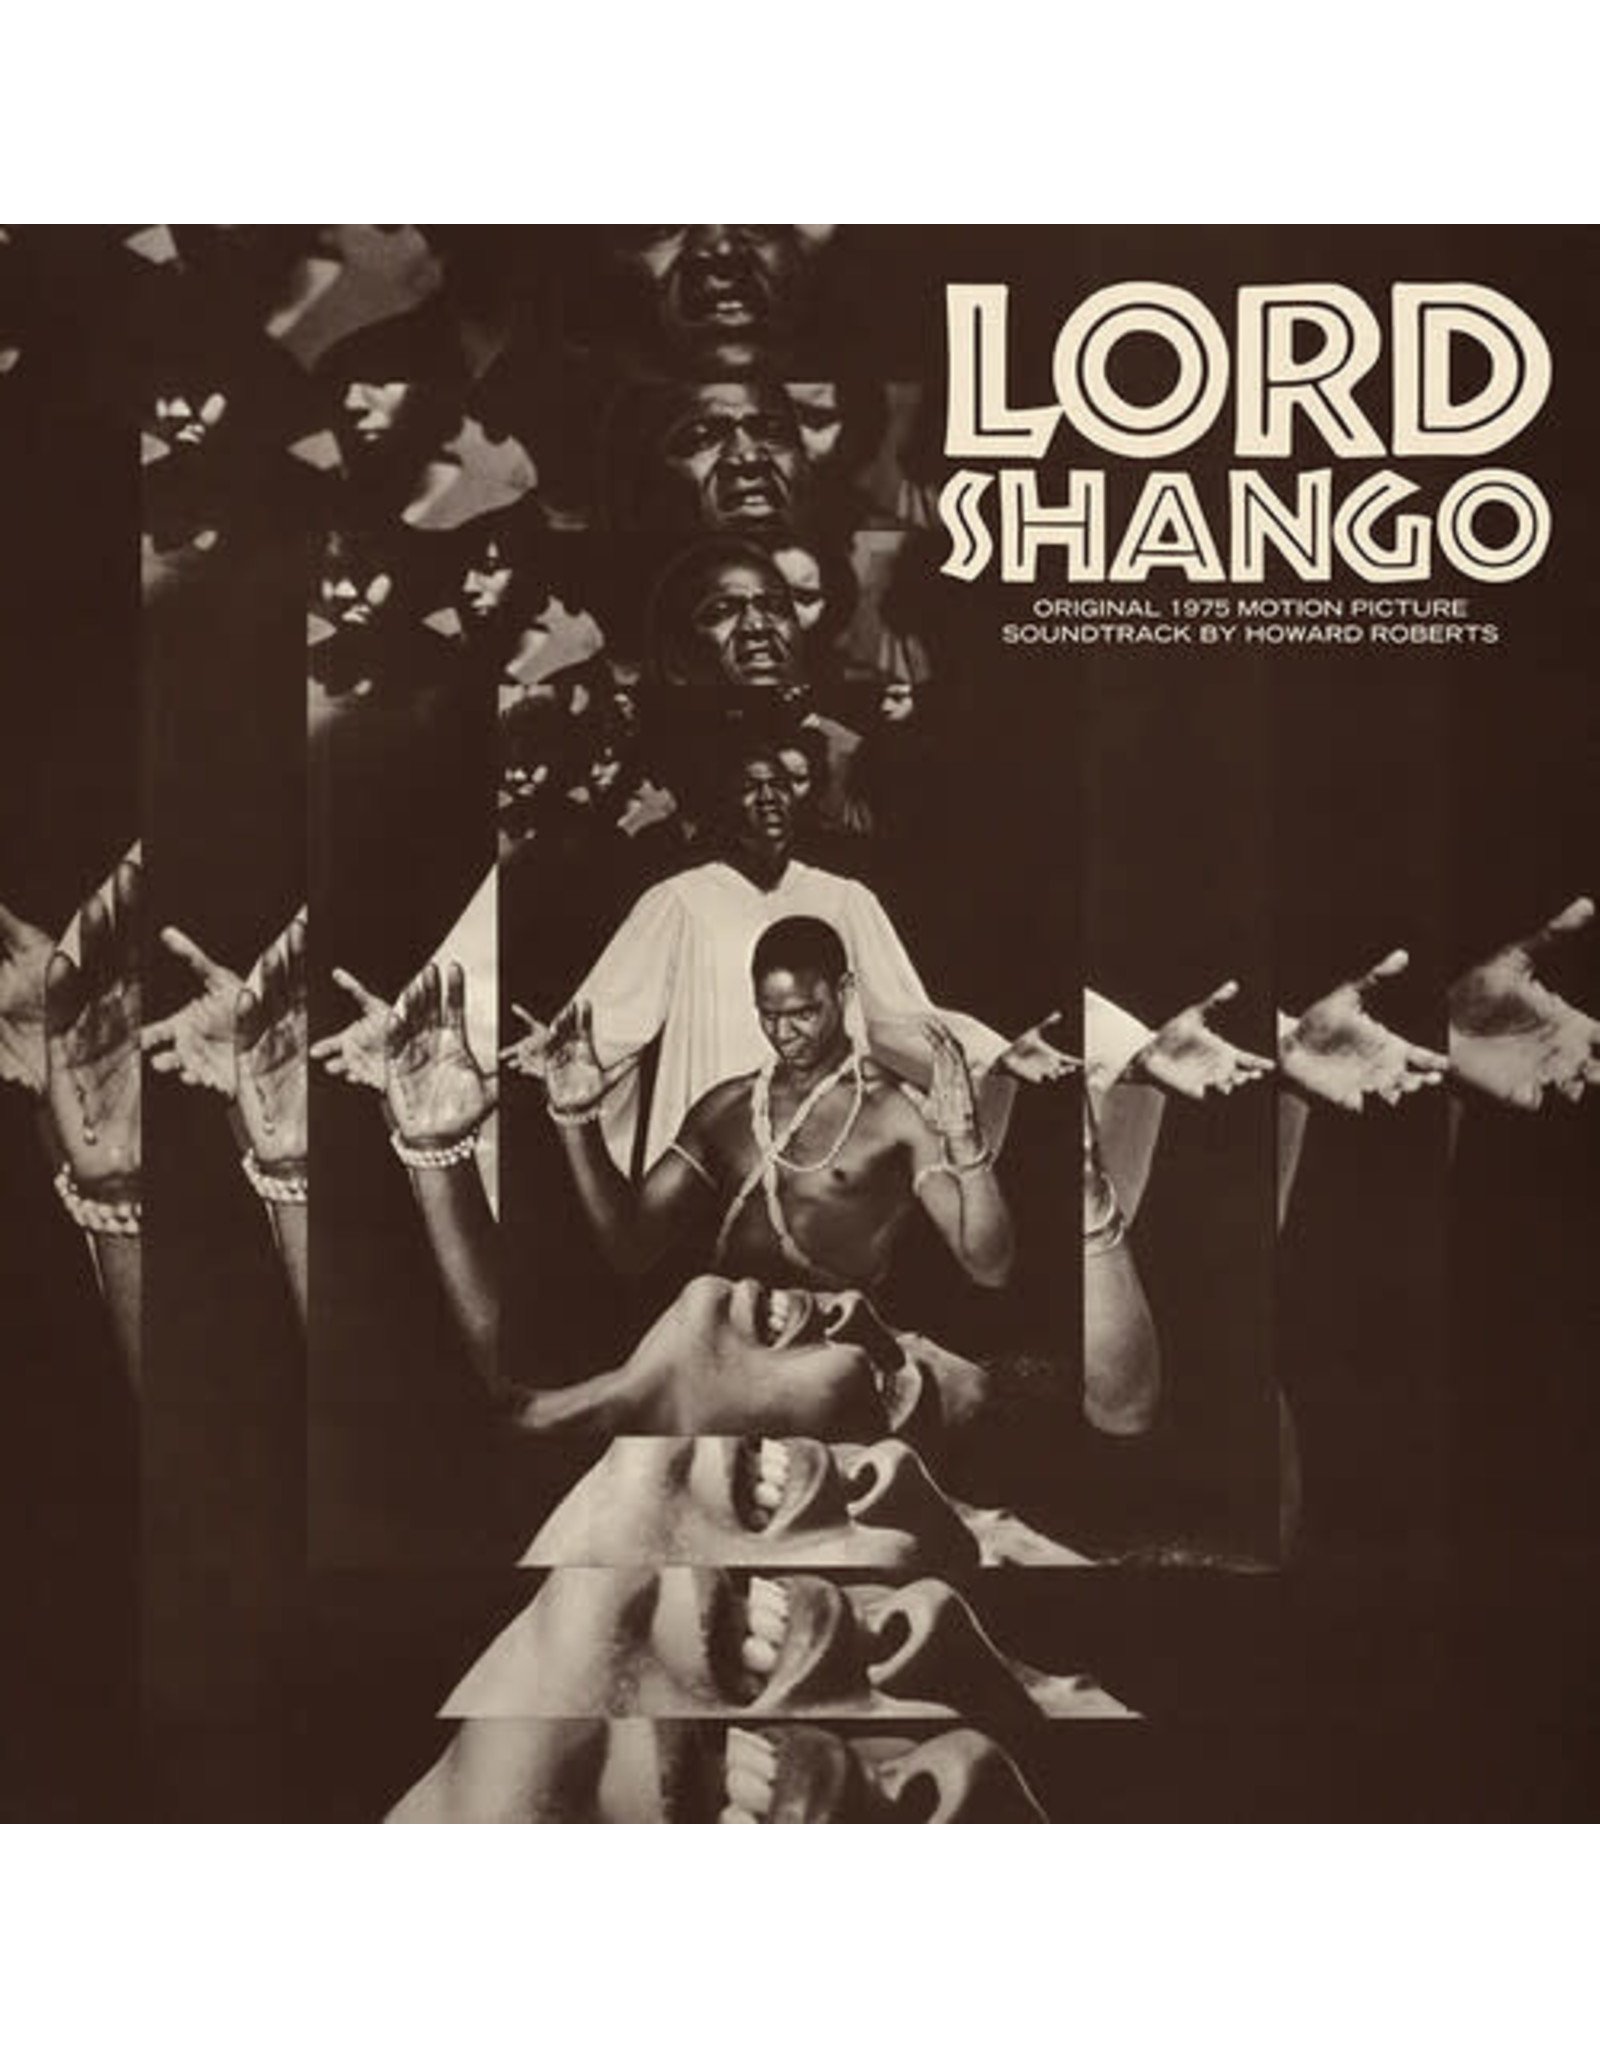 New Vinyl Howard Roberts - Lord Shango OST LP